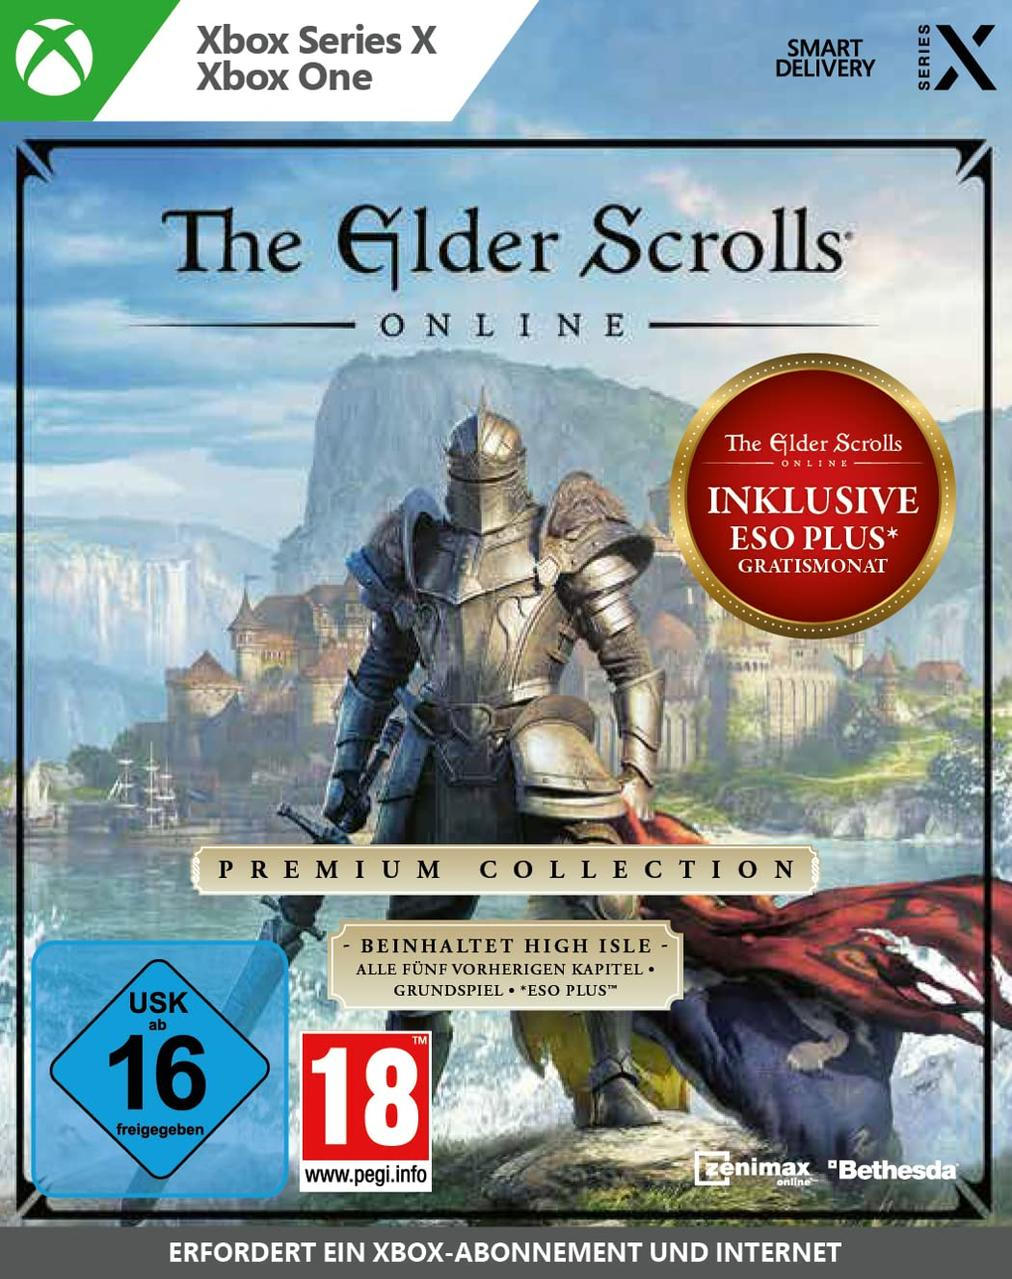 Online: Premium [Xbox Elder X|S] - Collection The Series Scrolls